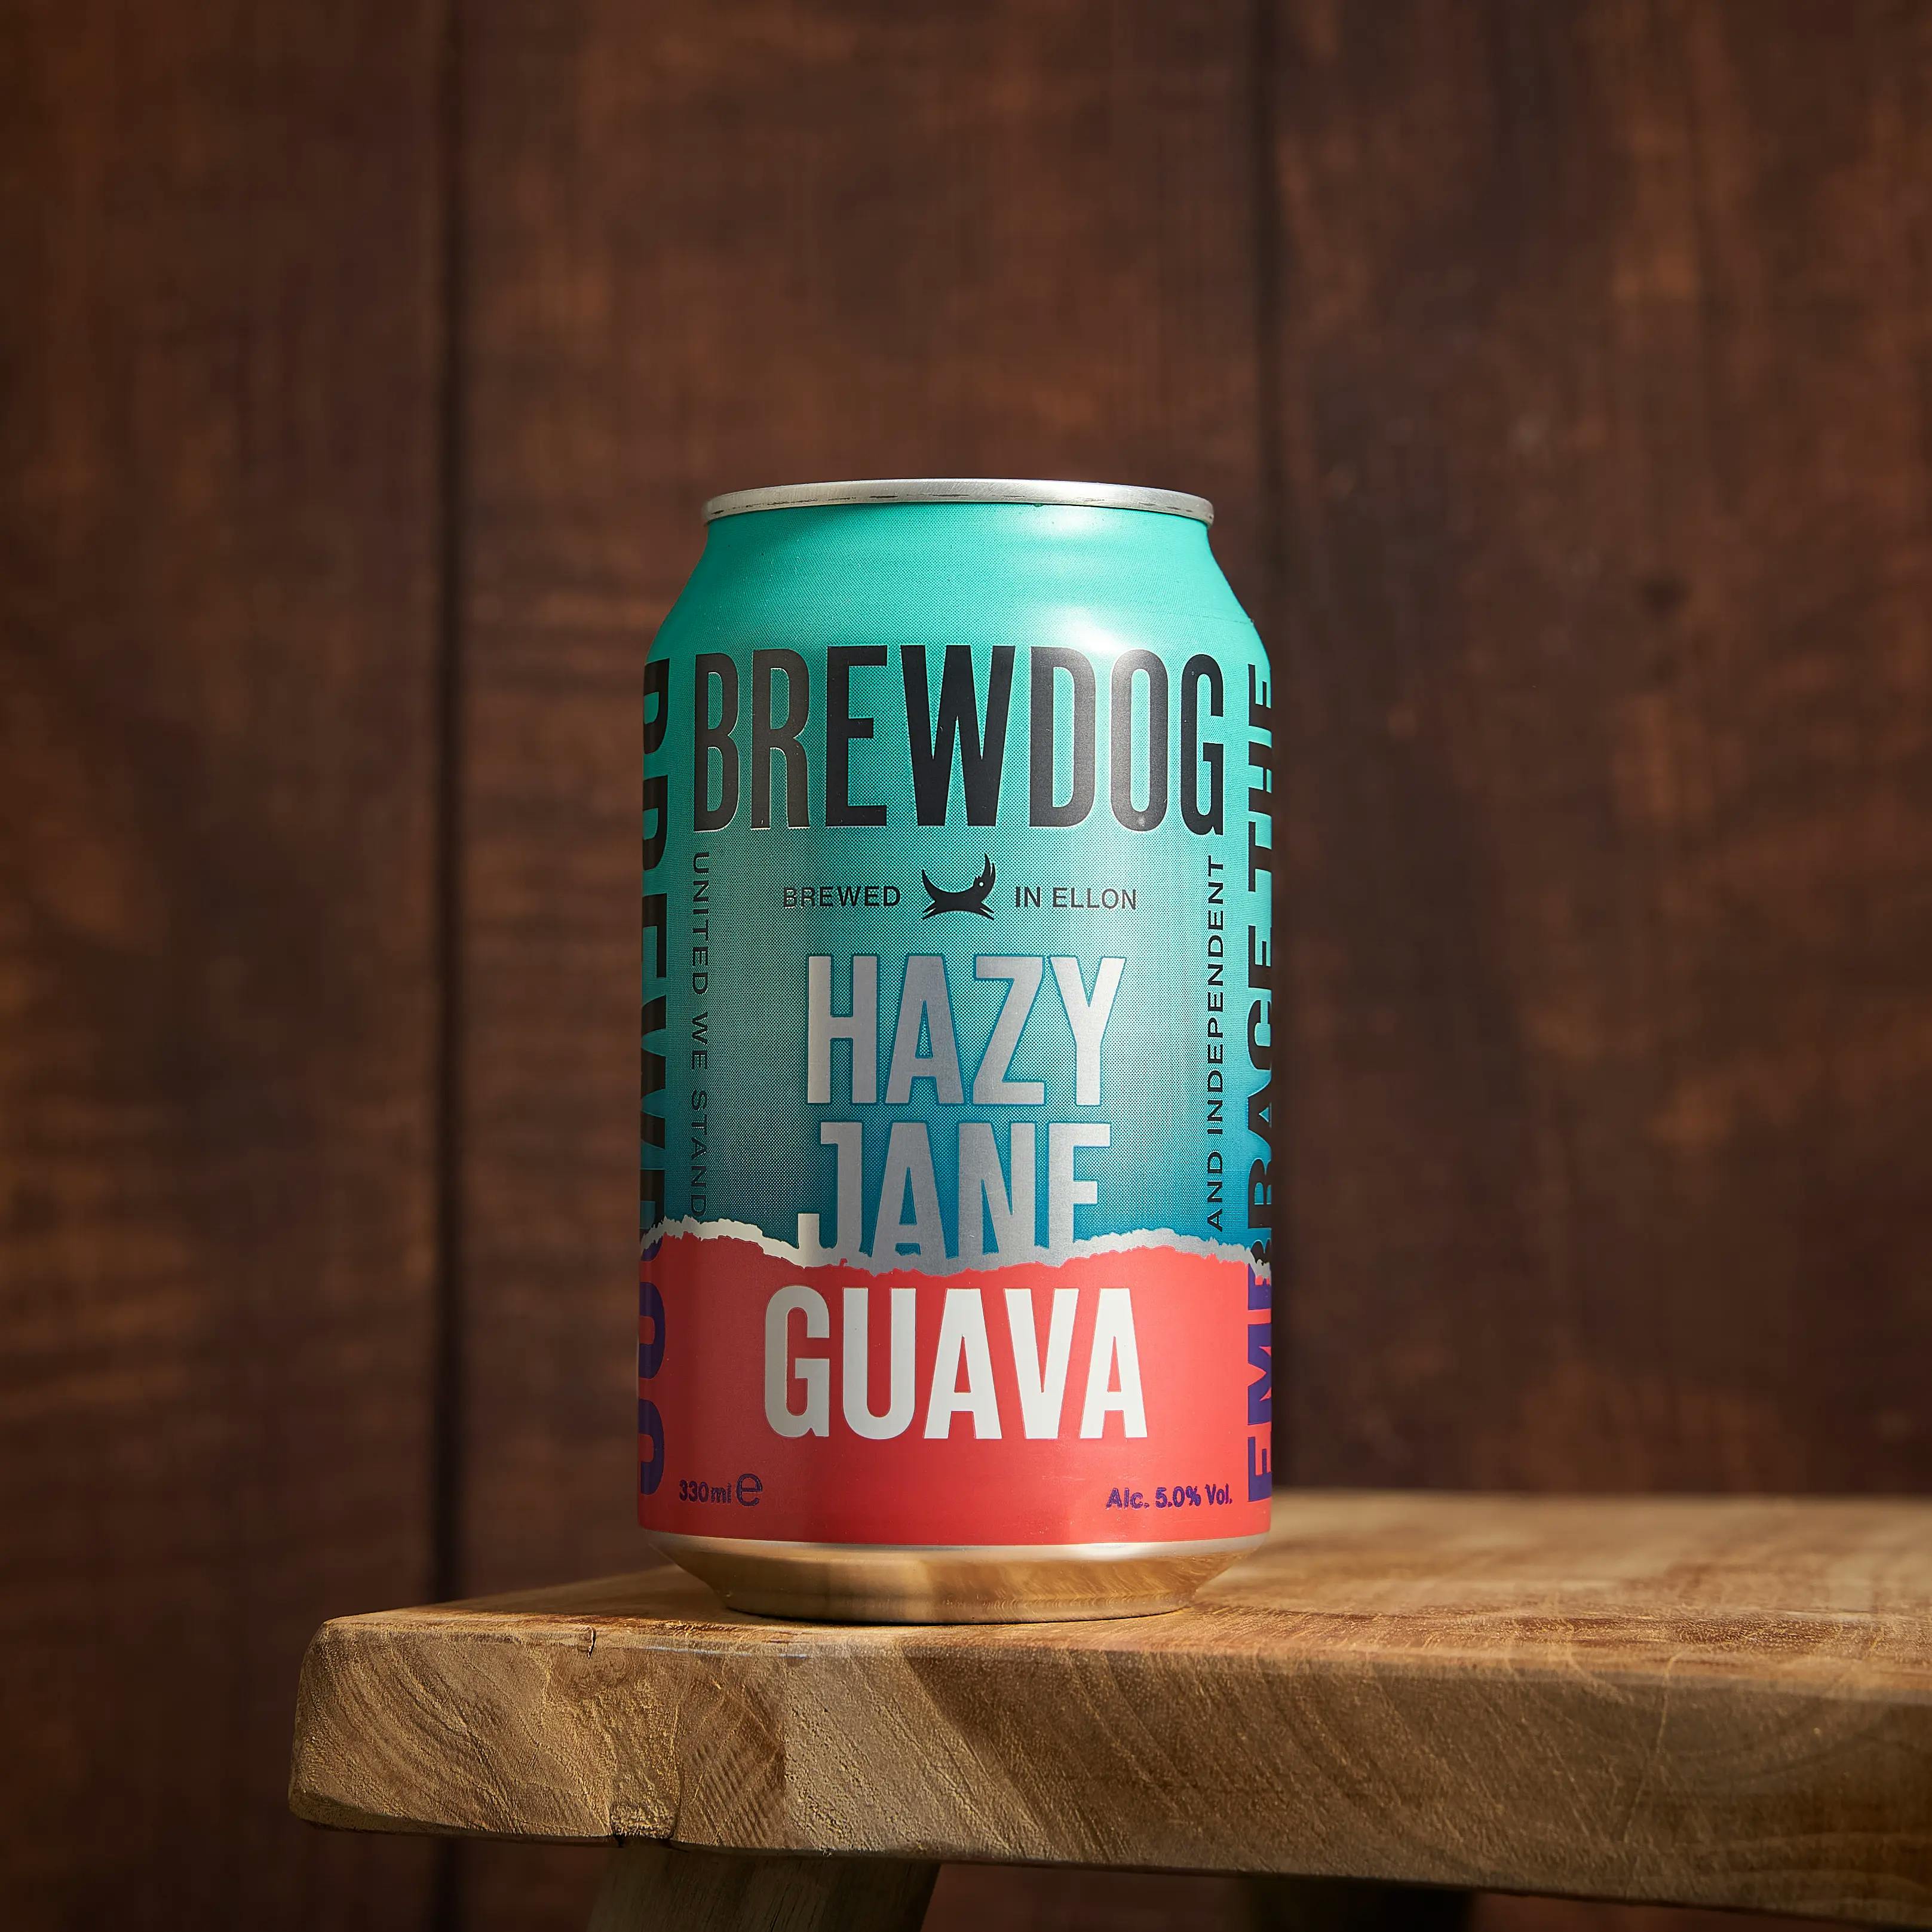 Brewdog Hazy Jane Guava 2